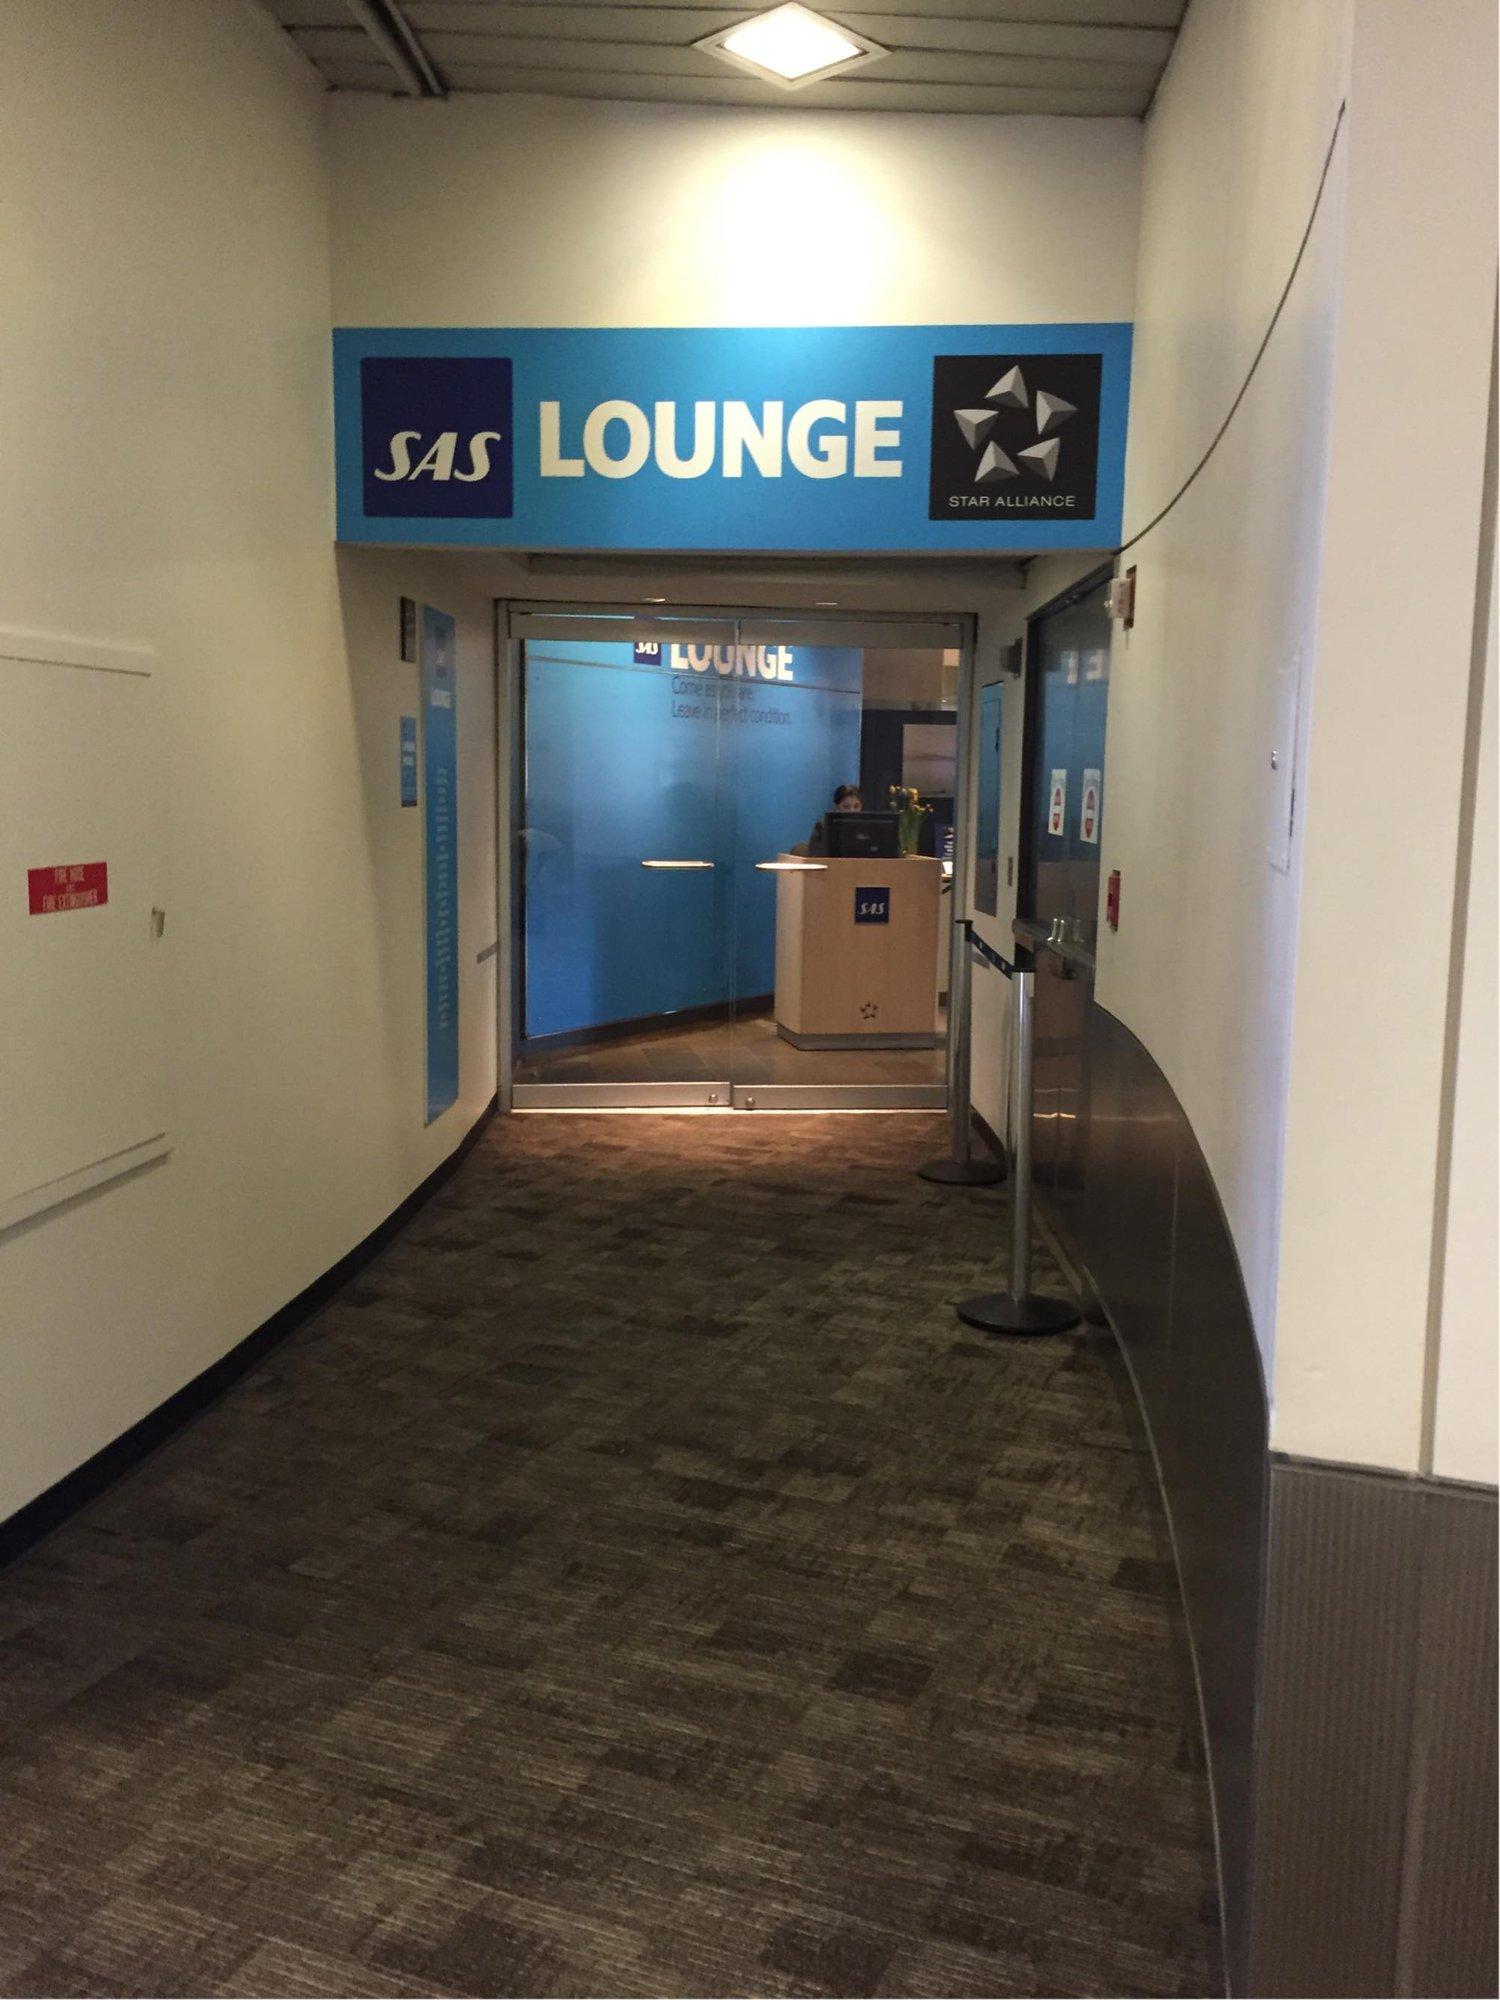 SAS Lounge image 5 of 5